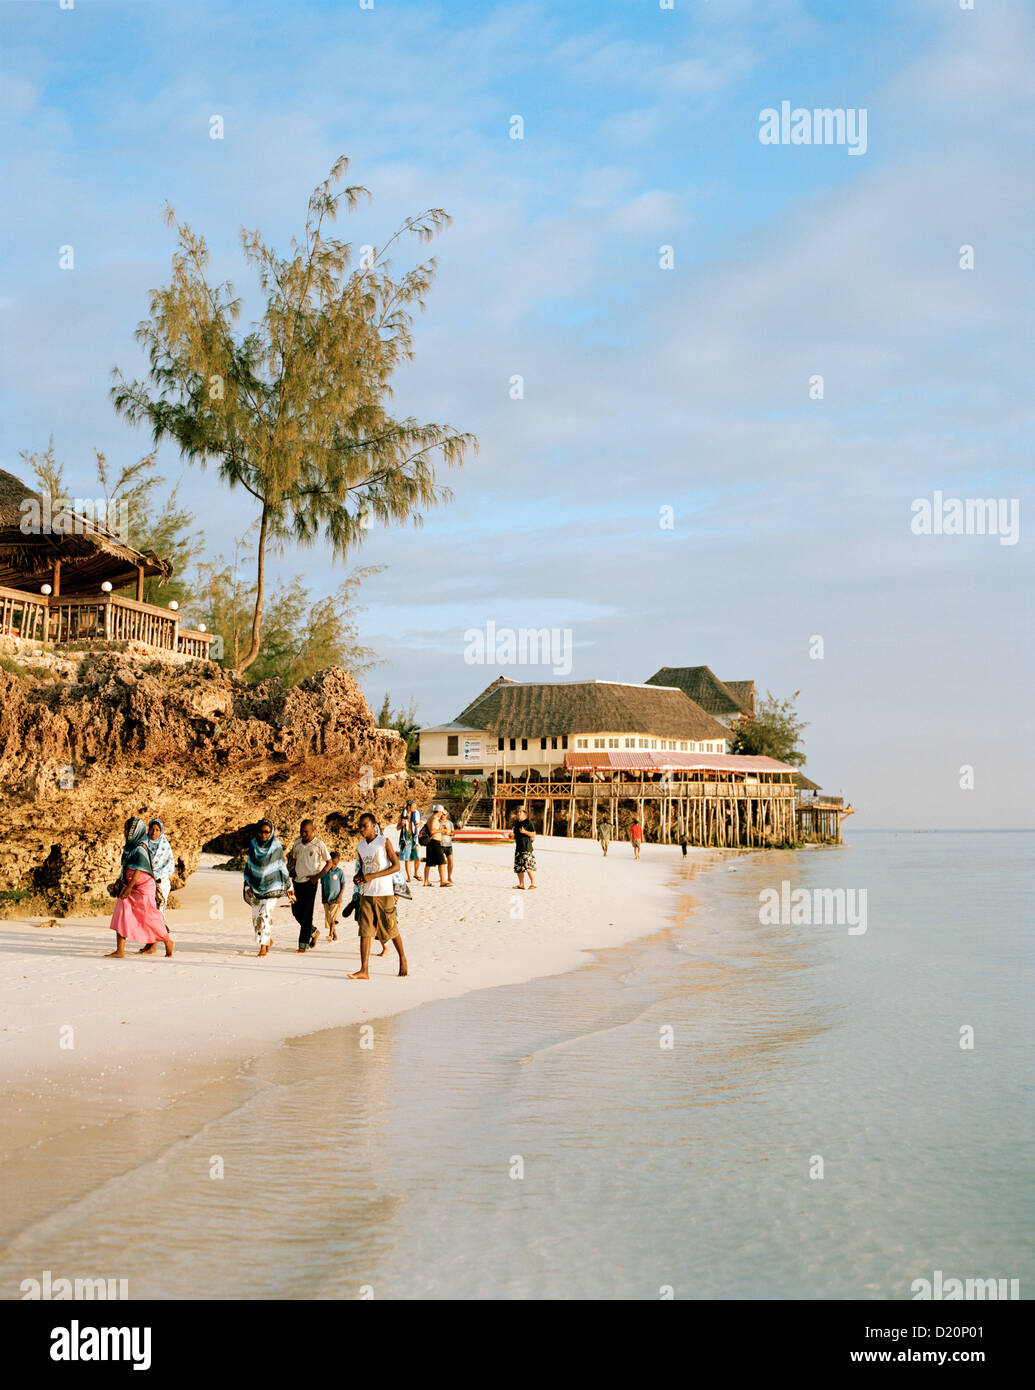 Nungwi village beach, westside with restaurants on stilts, Bakaras Resort, Zanzibar, Tanzania, East Africa Stock Photo